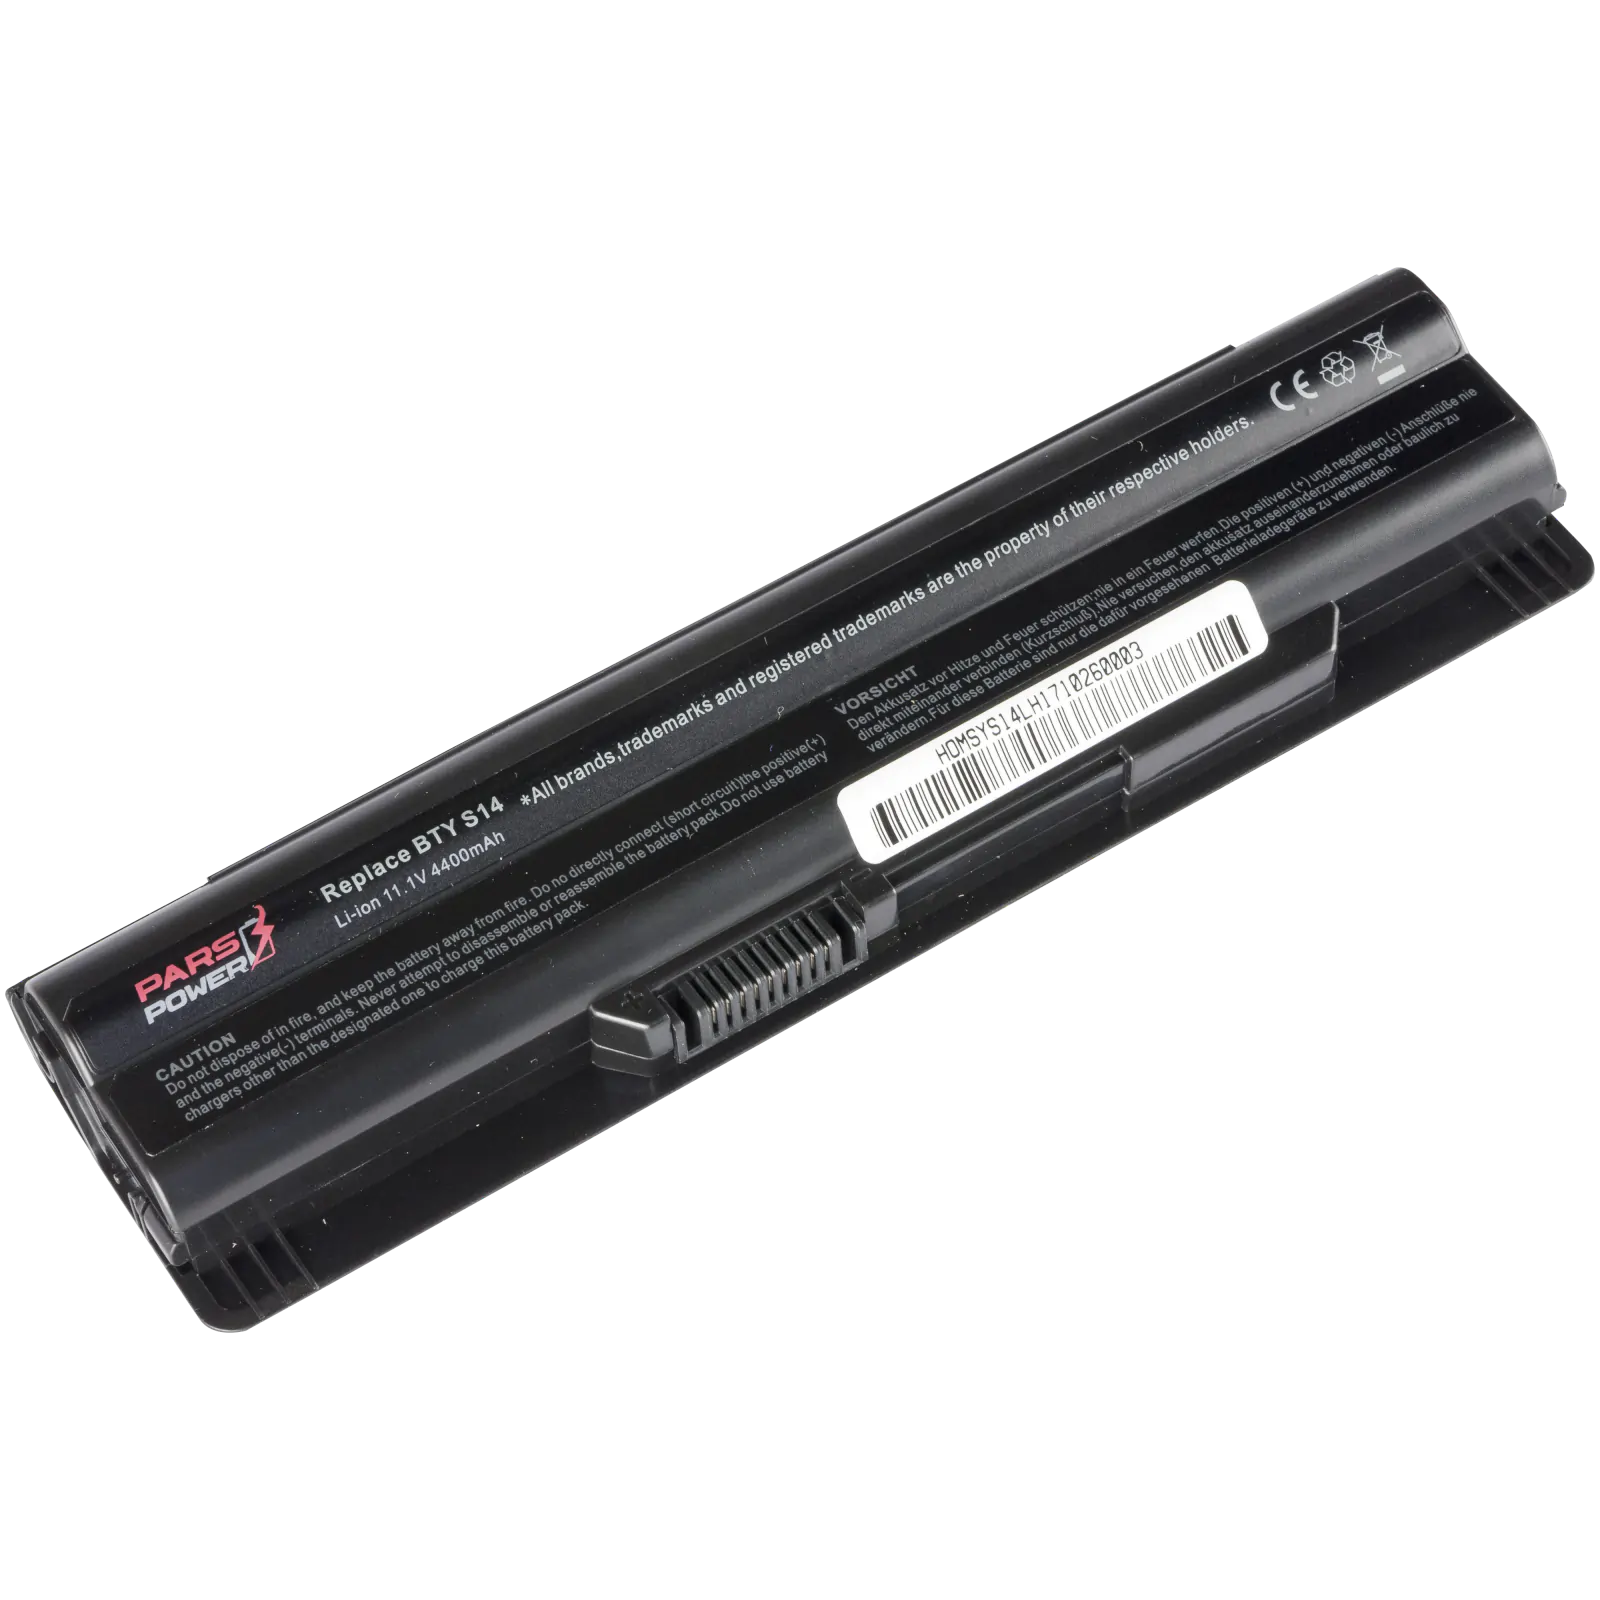 Msi CR650-634XTR, FX620DX-041TR, Notebook Batarya - Pil (Pars Power)